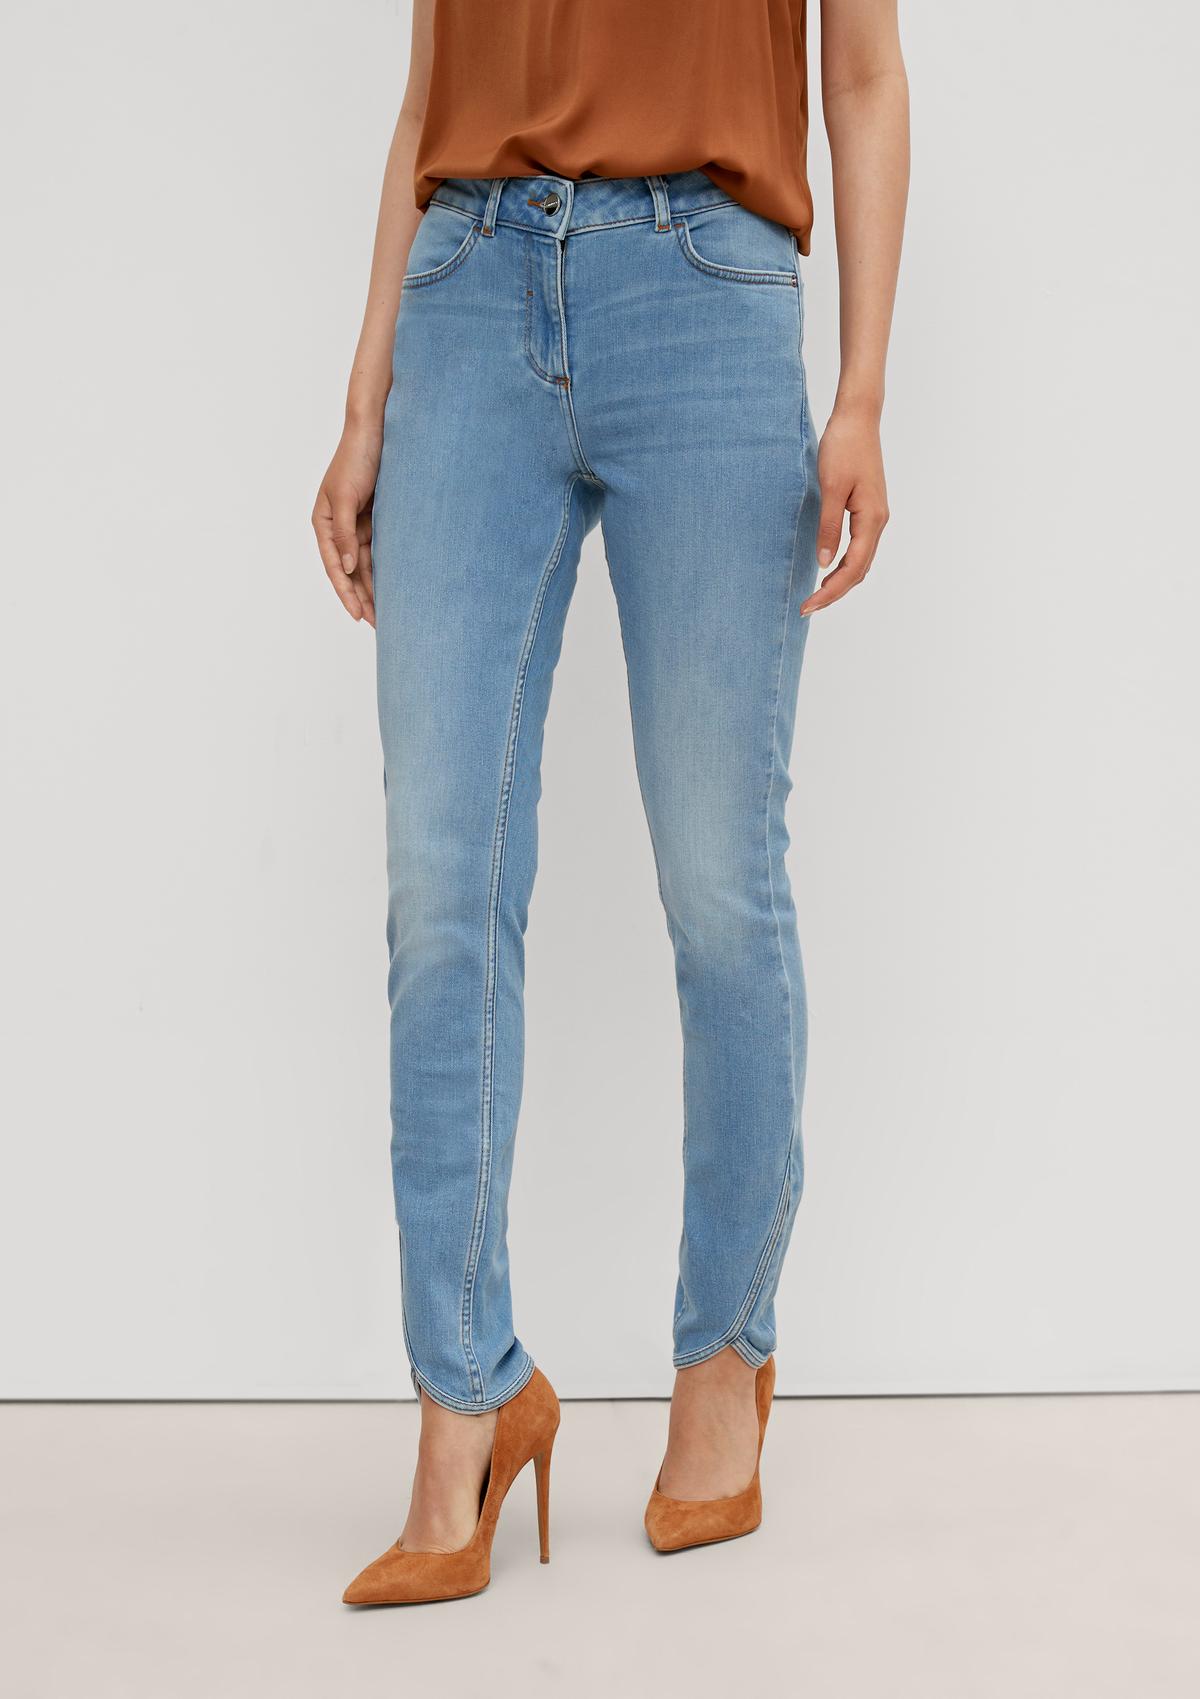 jeans Slim - 7/8-length fit: Comma light | blue